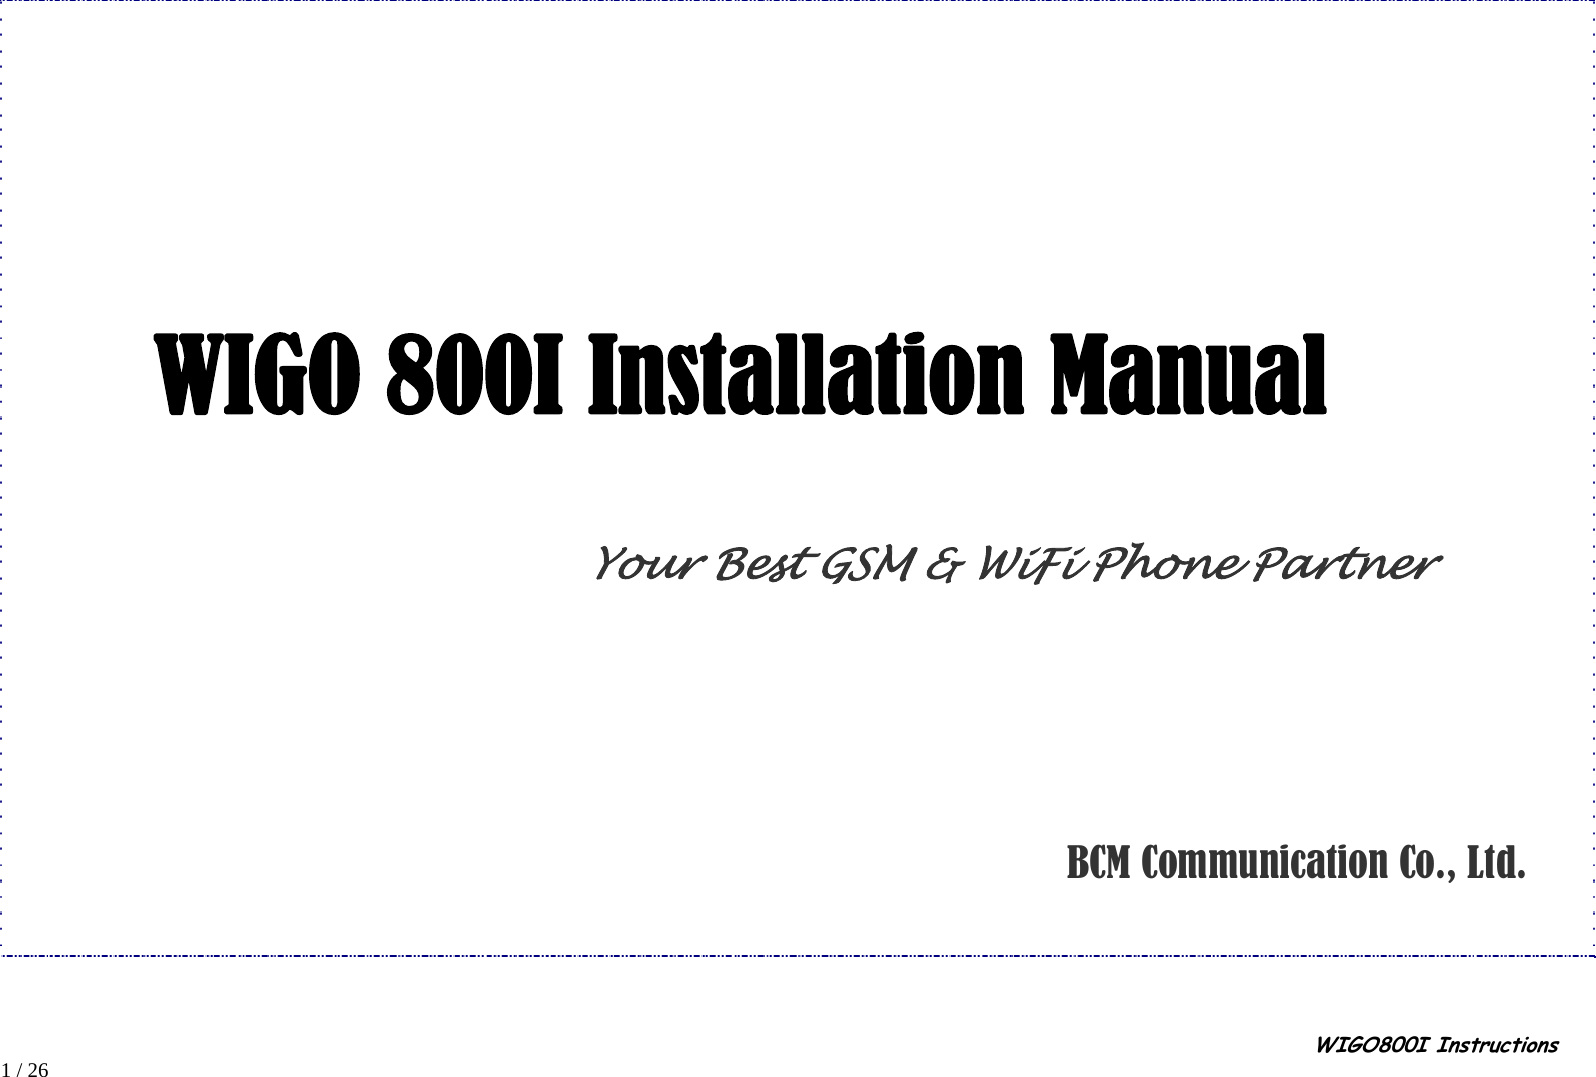                                                                                                                                                                                                                                                       WIGO800I Instructions            1 / 26    WIGO 800I Installation Manual Your Best GSM &amp; WiFi Phone Partner                                                     BCM Communication Co., Ltd.  